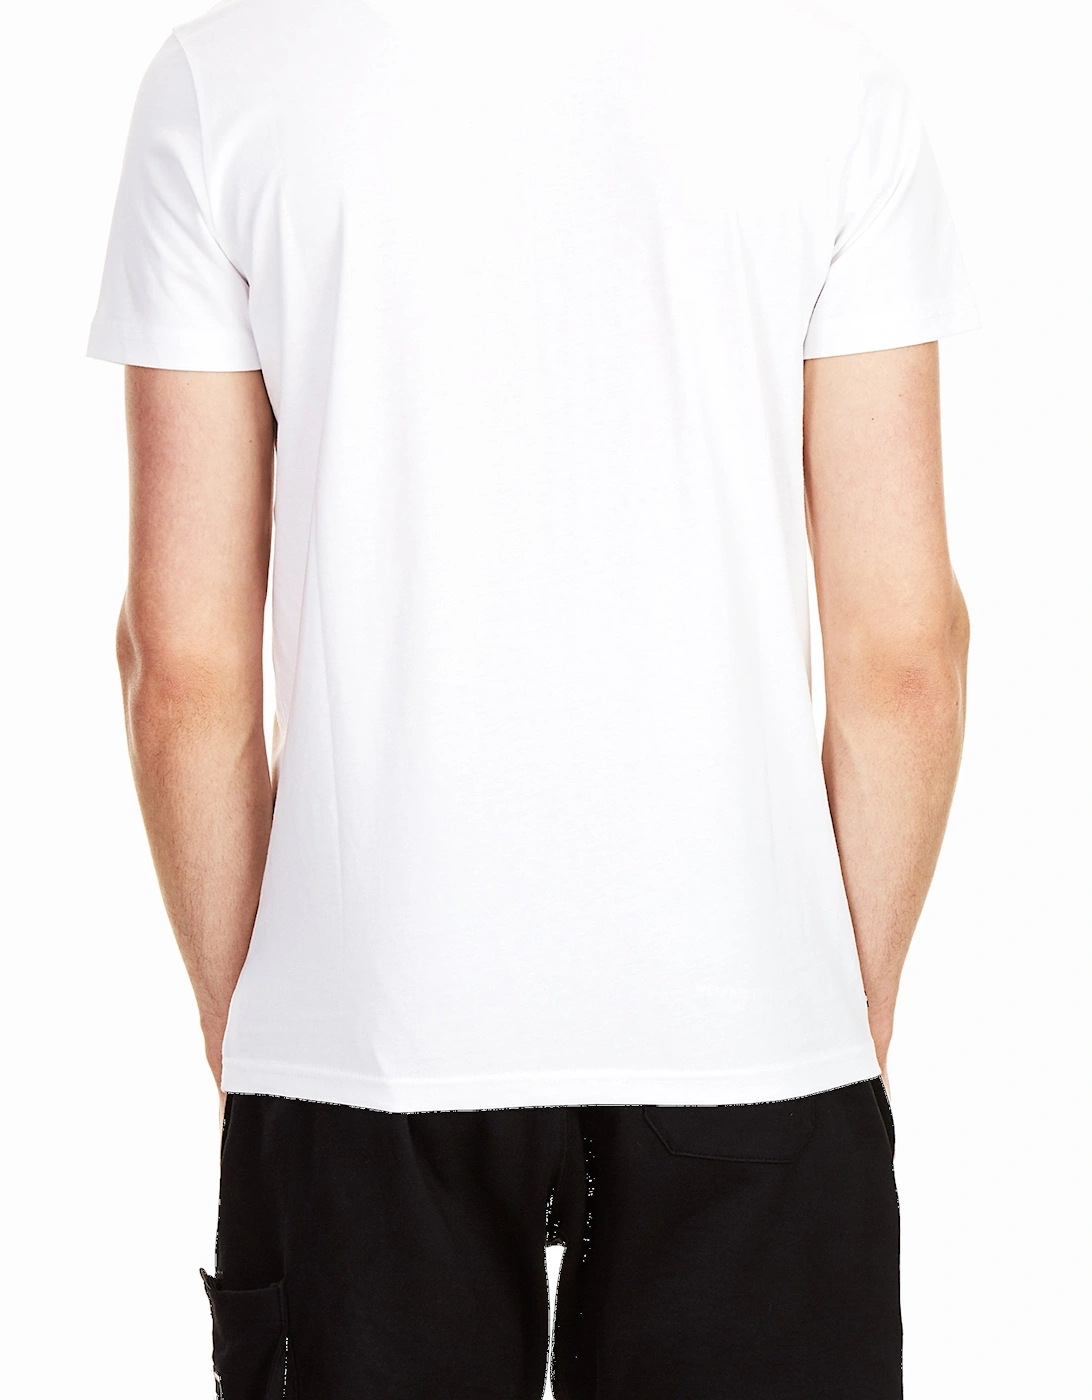 Rattler Graphic Print T-Shirt | White